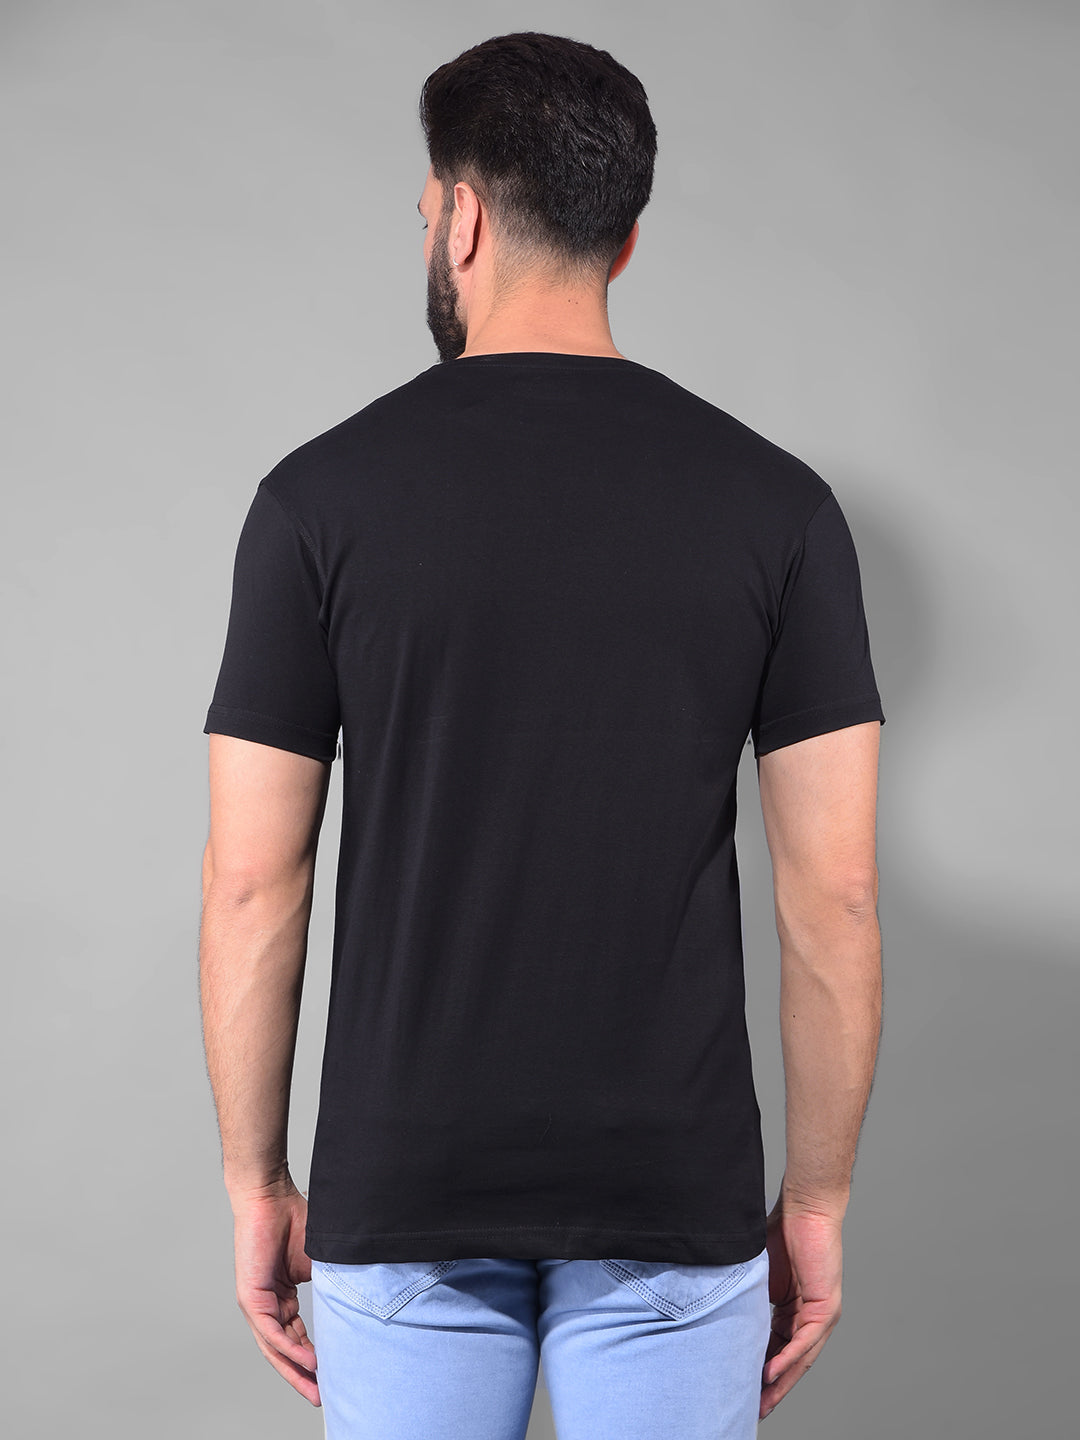 cobb black printed round neck t-shirt